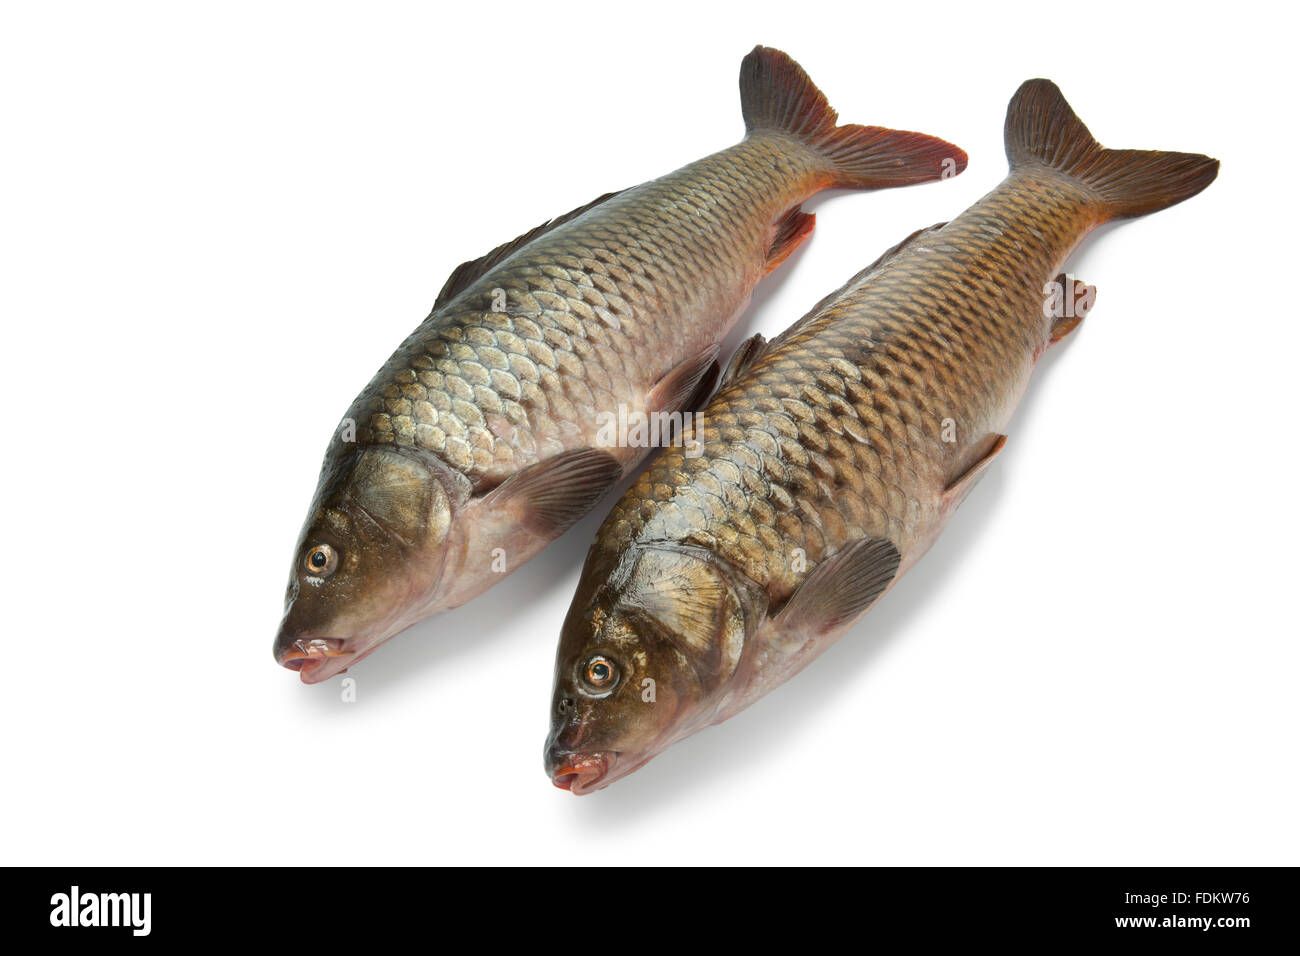 Two fresh whole carp fishes at white background Stock Photo